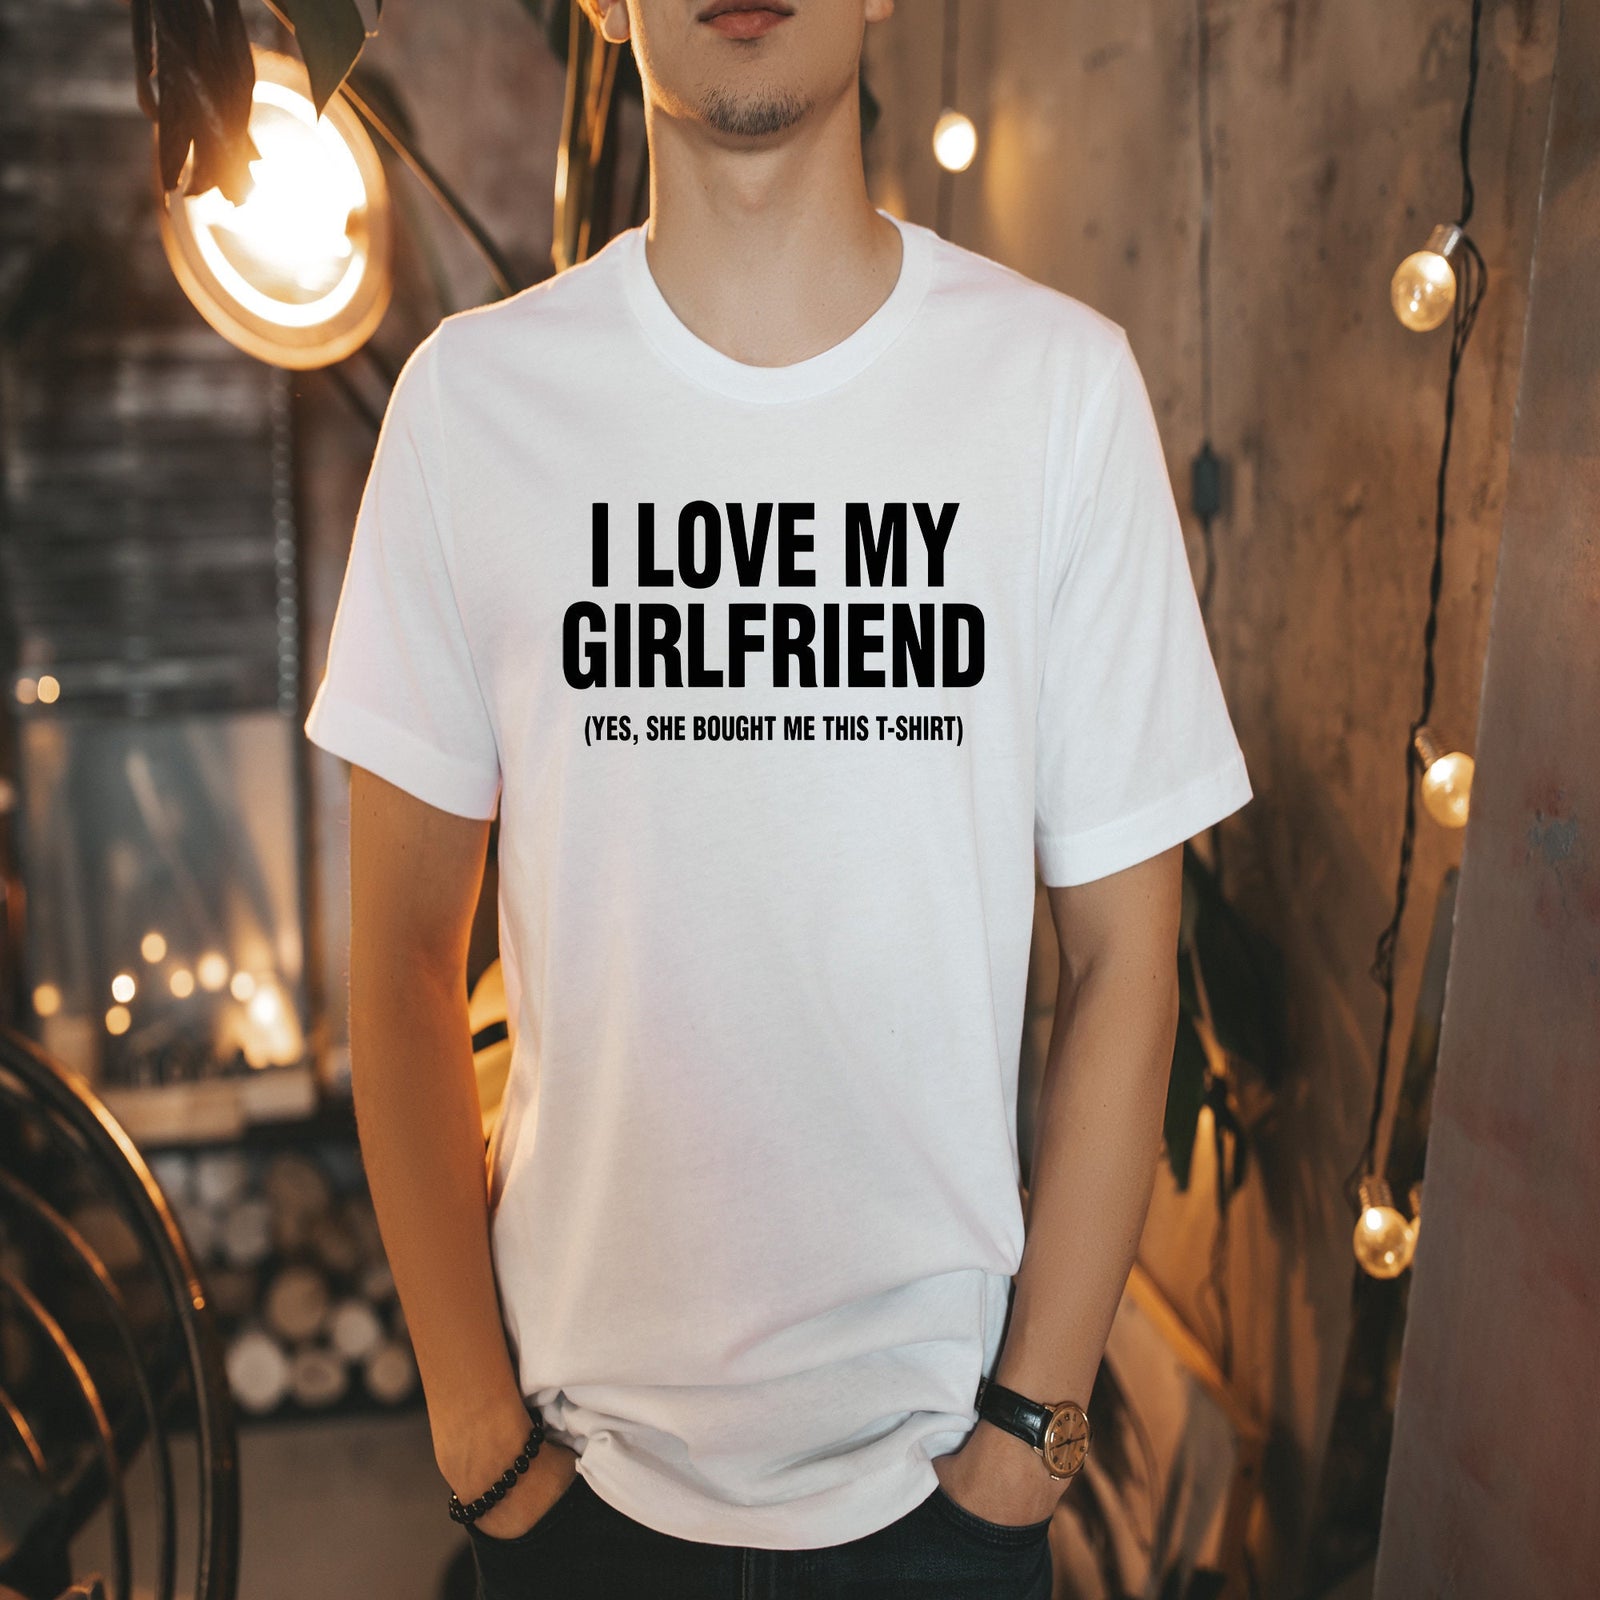 I Love My Girlfriend T Shirt- Funny Men's T-shirt - Girlfriend Humor T-shirts - Boyfriend Statement Shirt